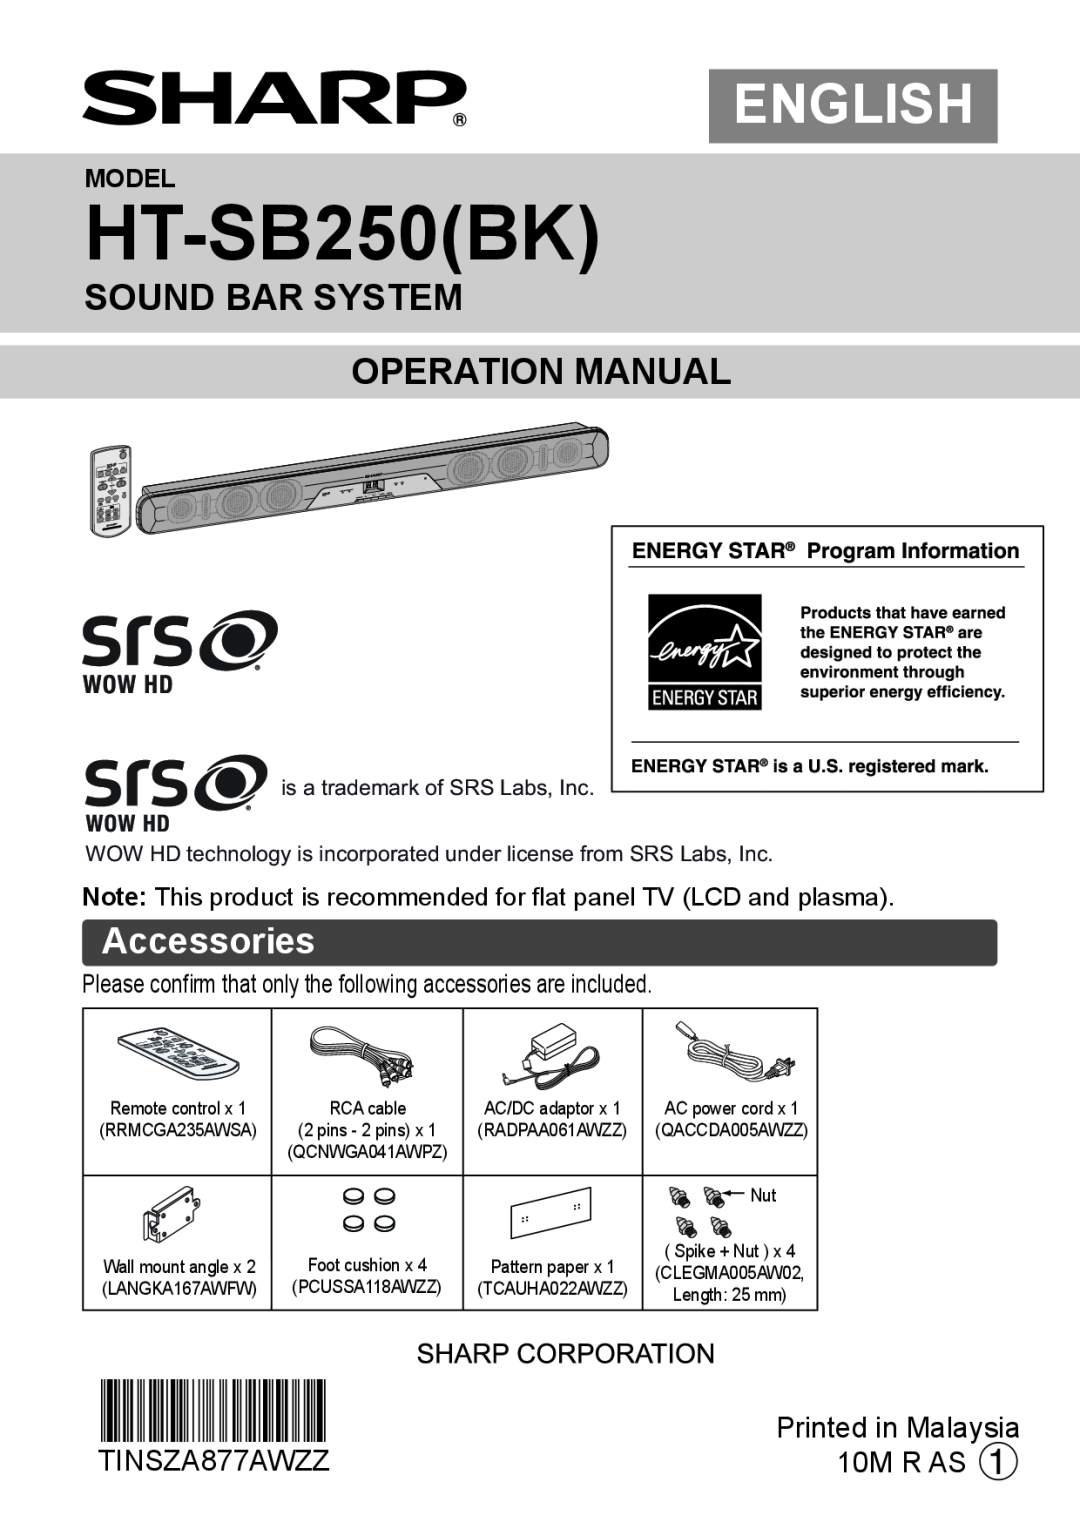 Sharp HTSB250 operation manual Accessories, Model, HT-SB250BK, English, 10M R AS, TINSZA877AWZZ 